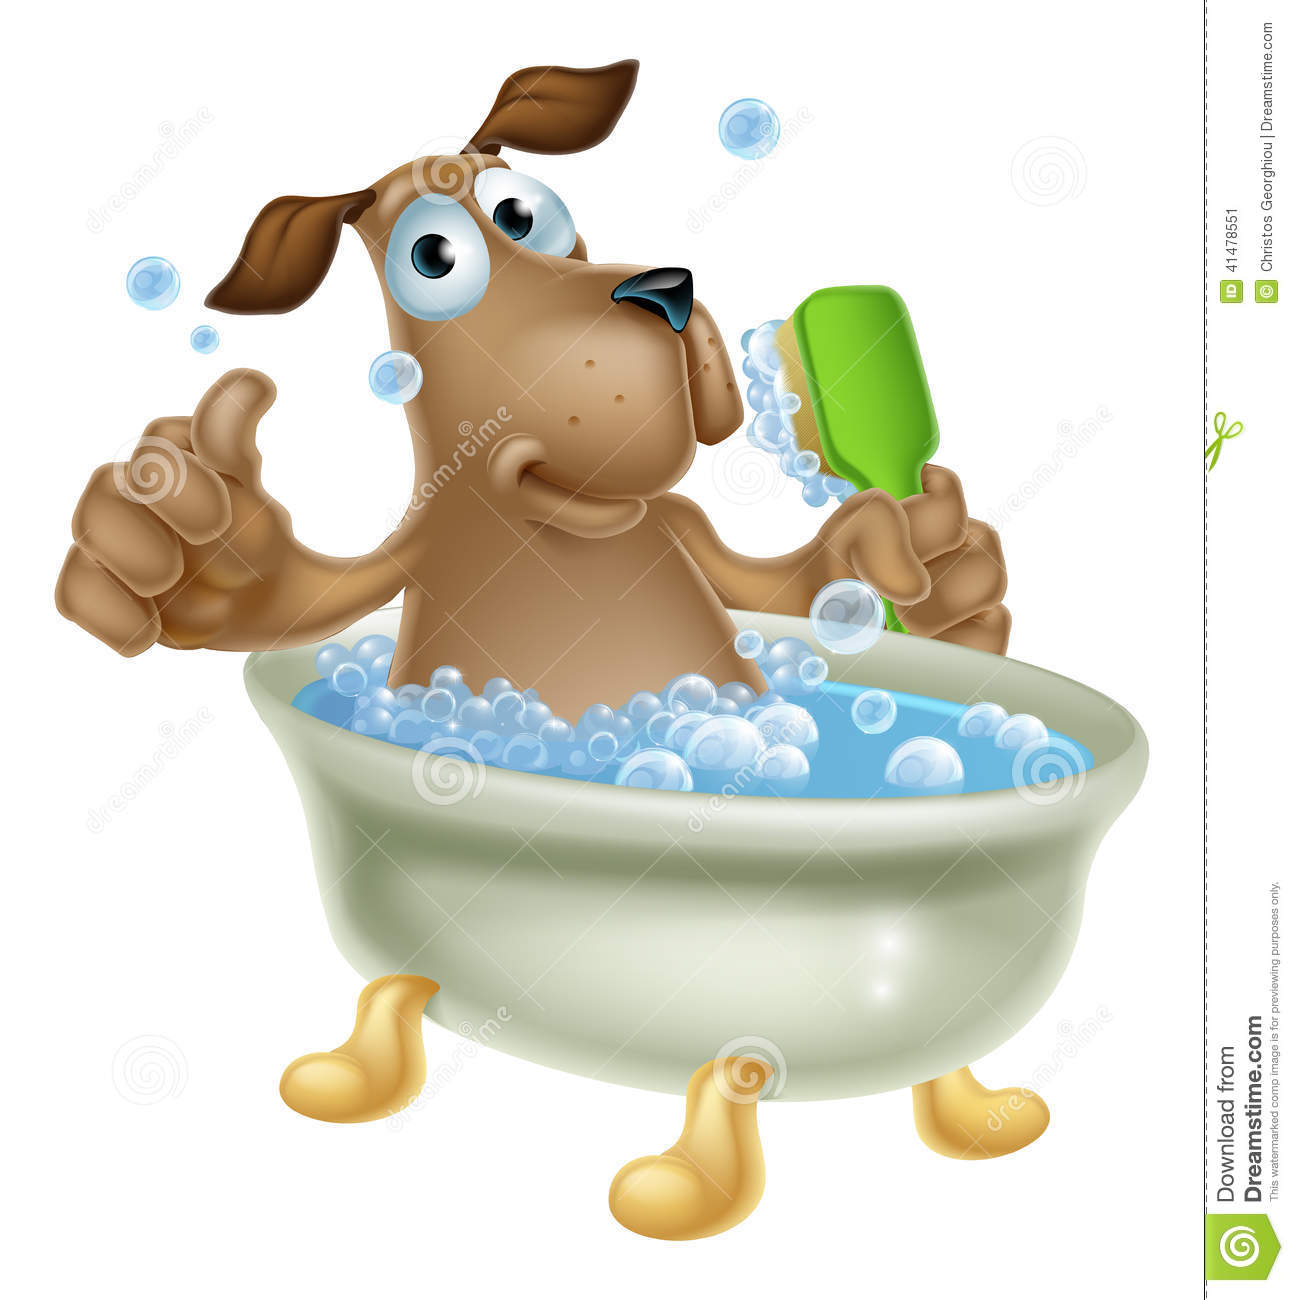 Cute Cartoon Dog Mascot Character Having A Bath In A Bubble Bath With